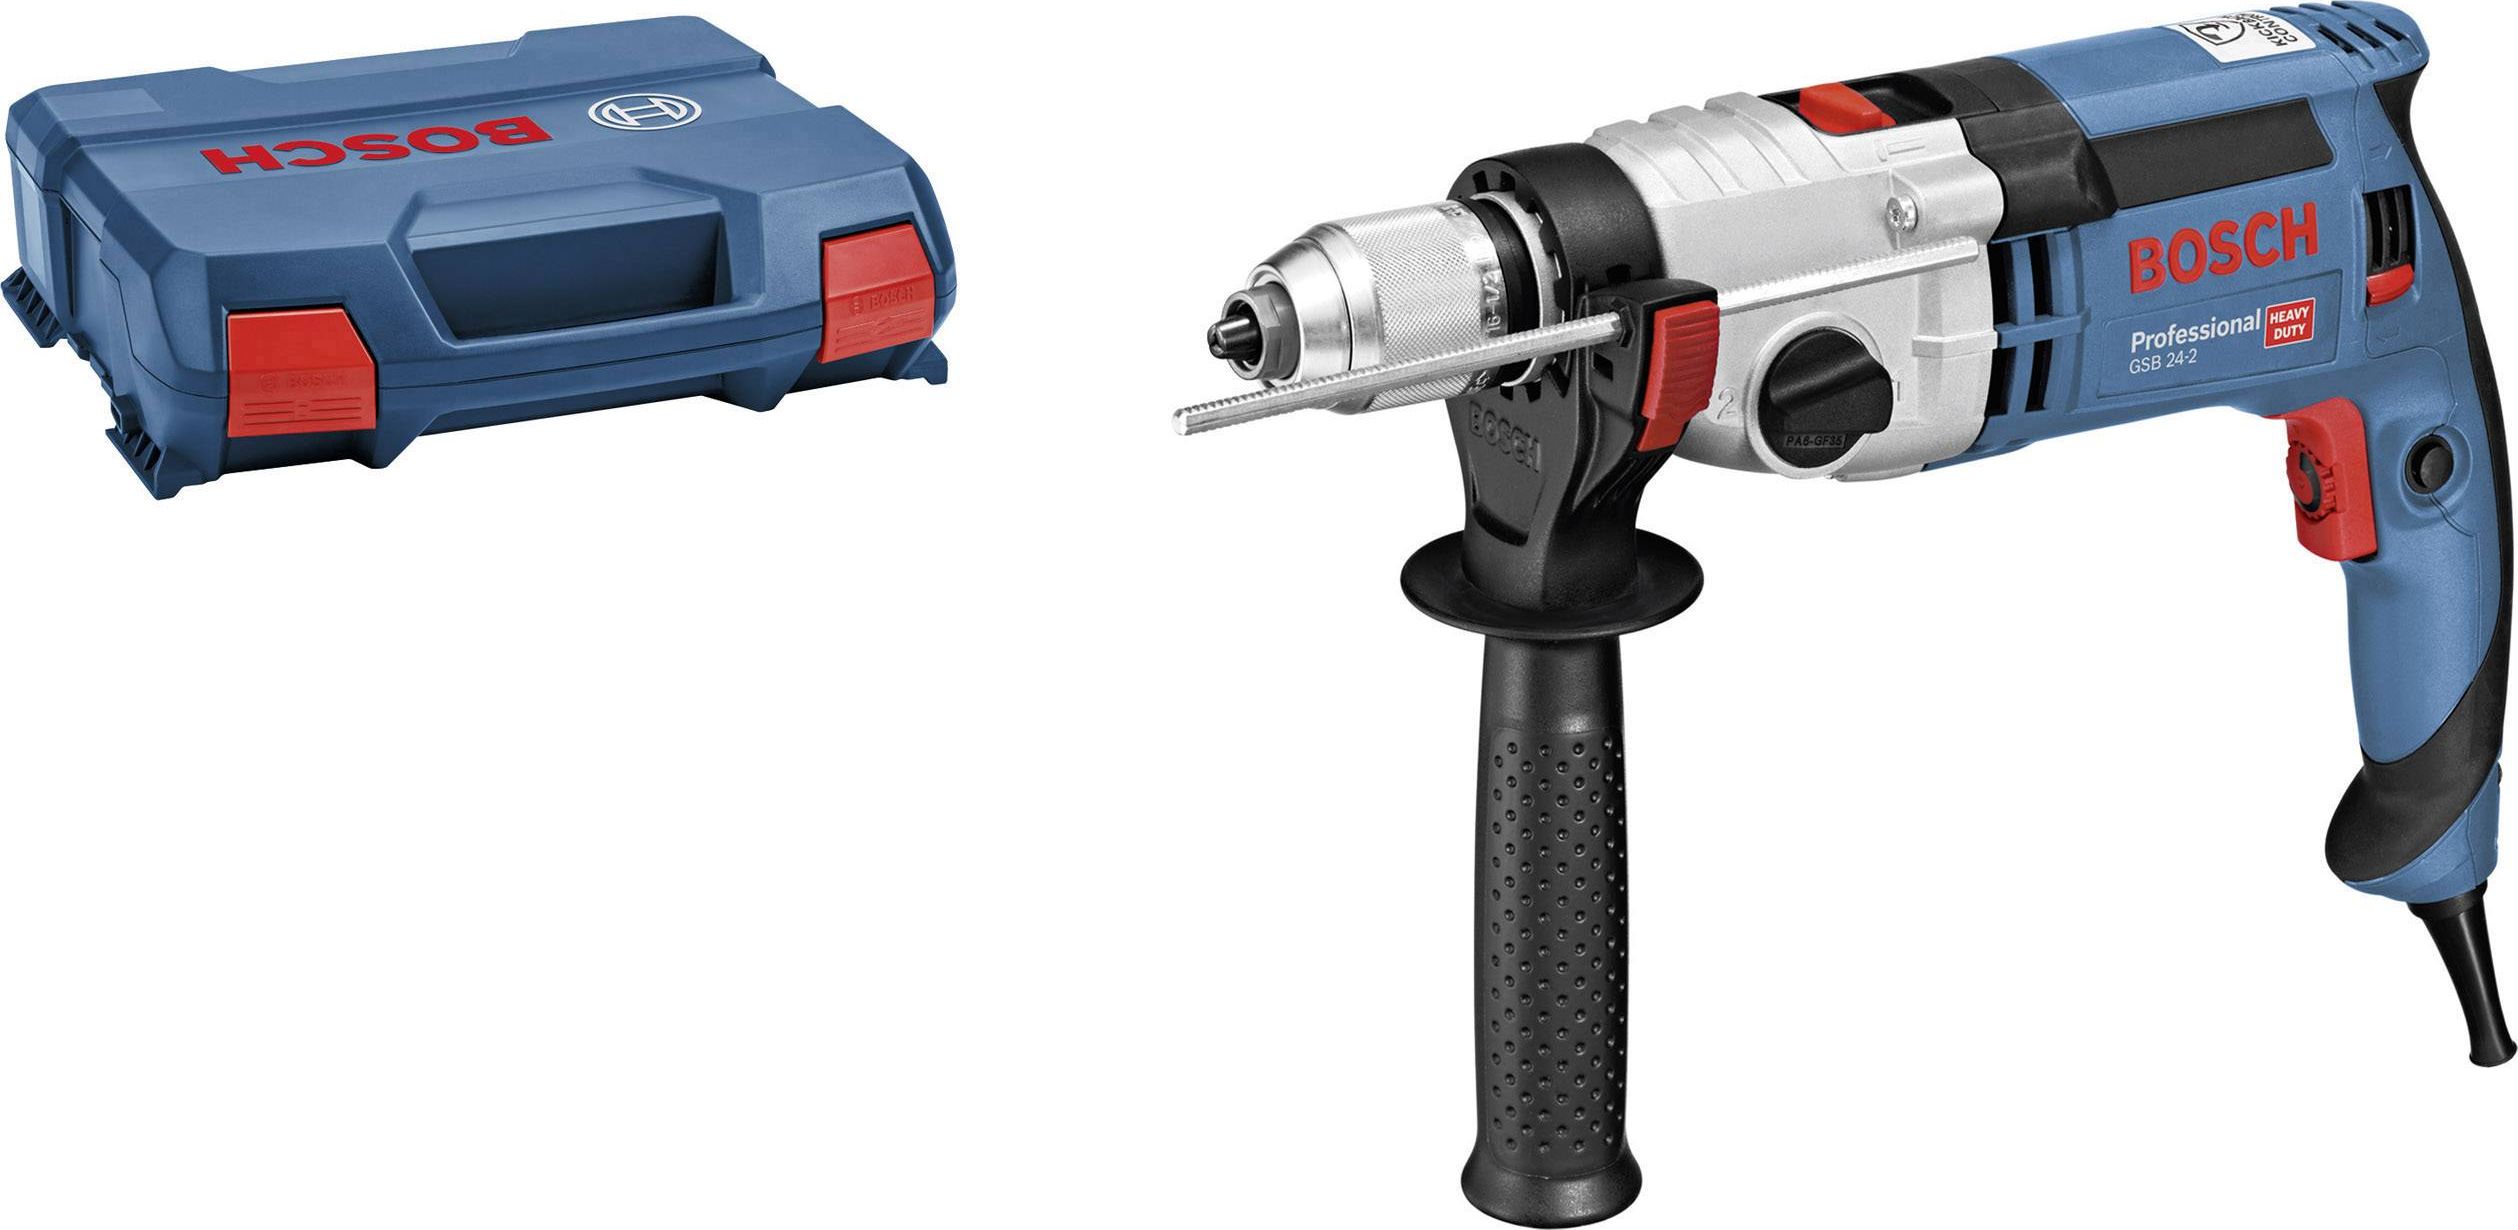 Bosch impact drill GSB 24-2 Professional (blue / black, 1,100 watts)